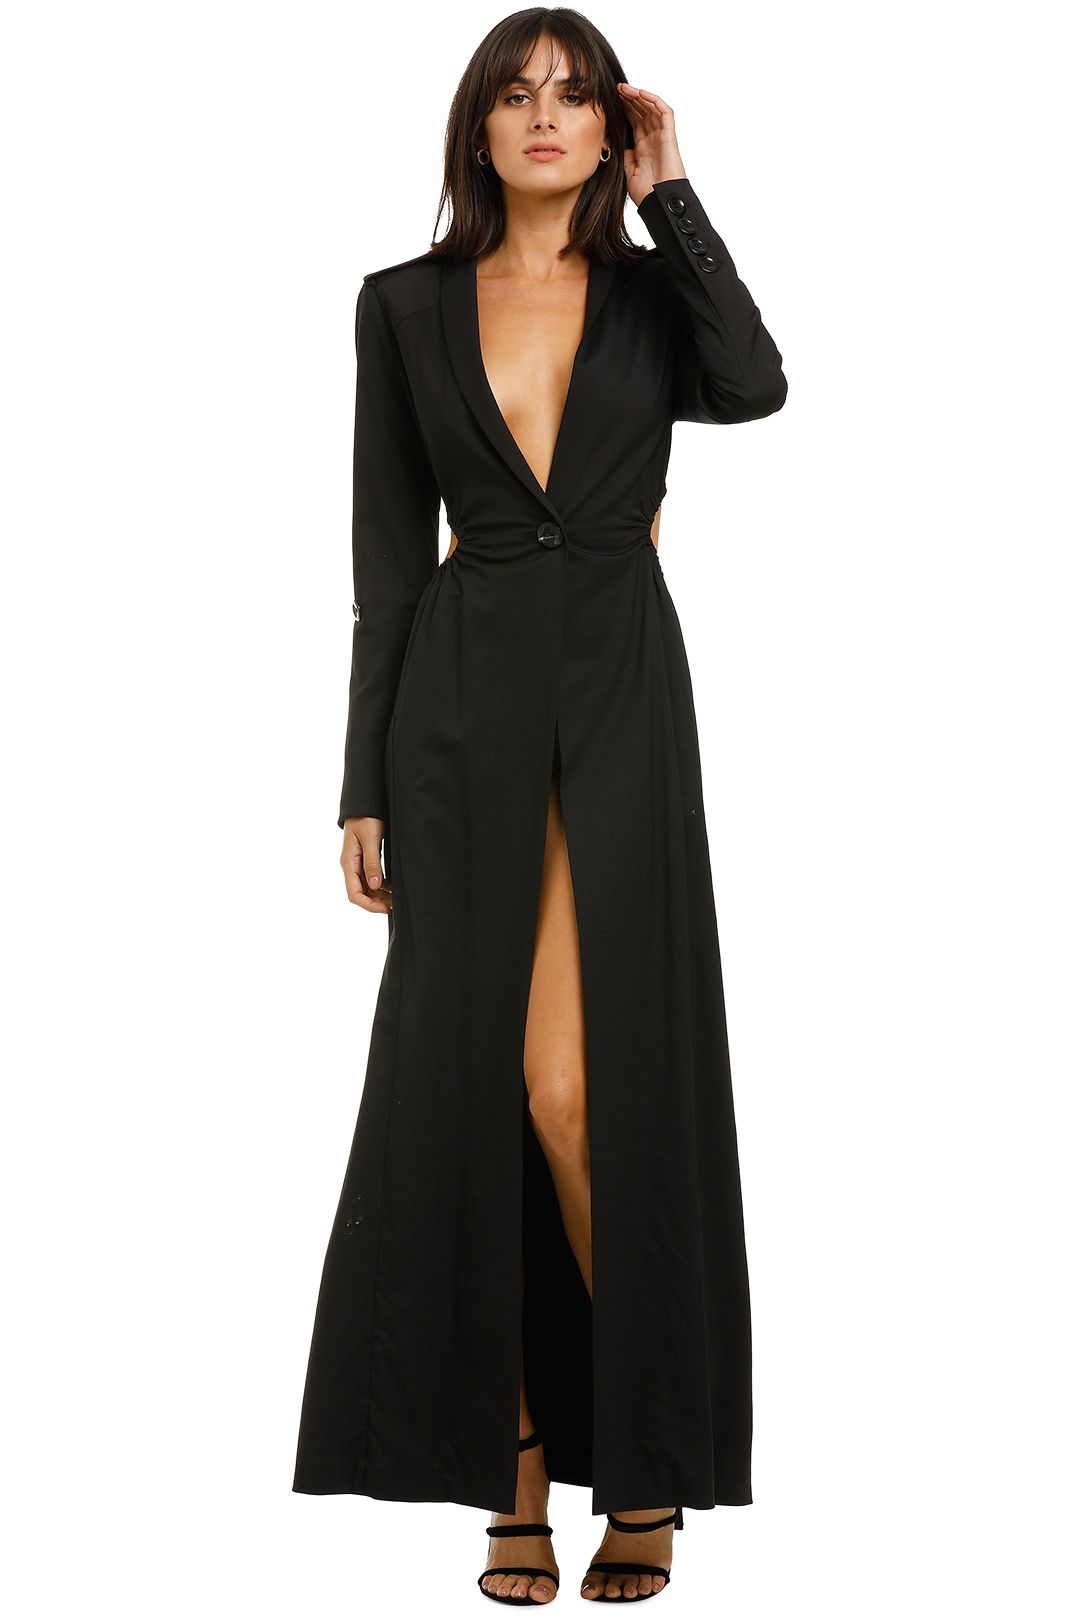 KITX-Cellular-Coat-Dress-Black-Front